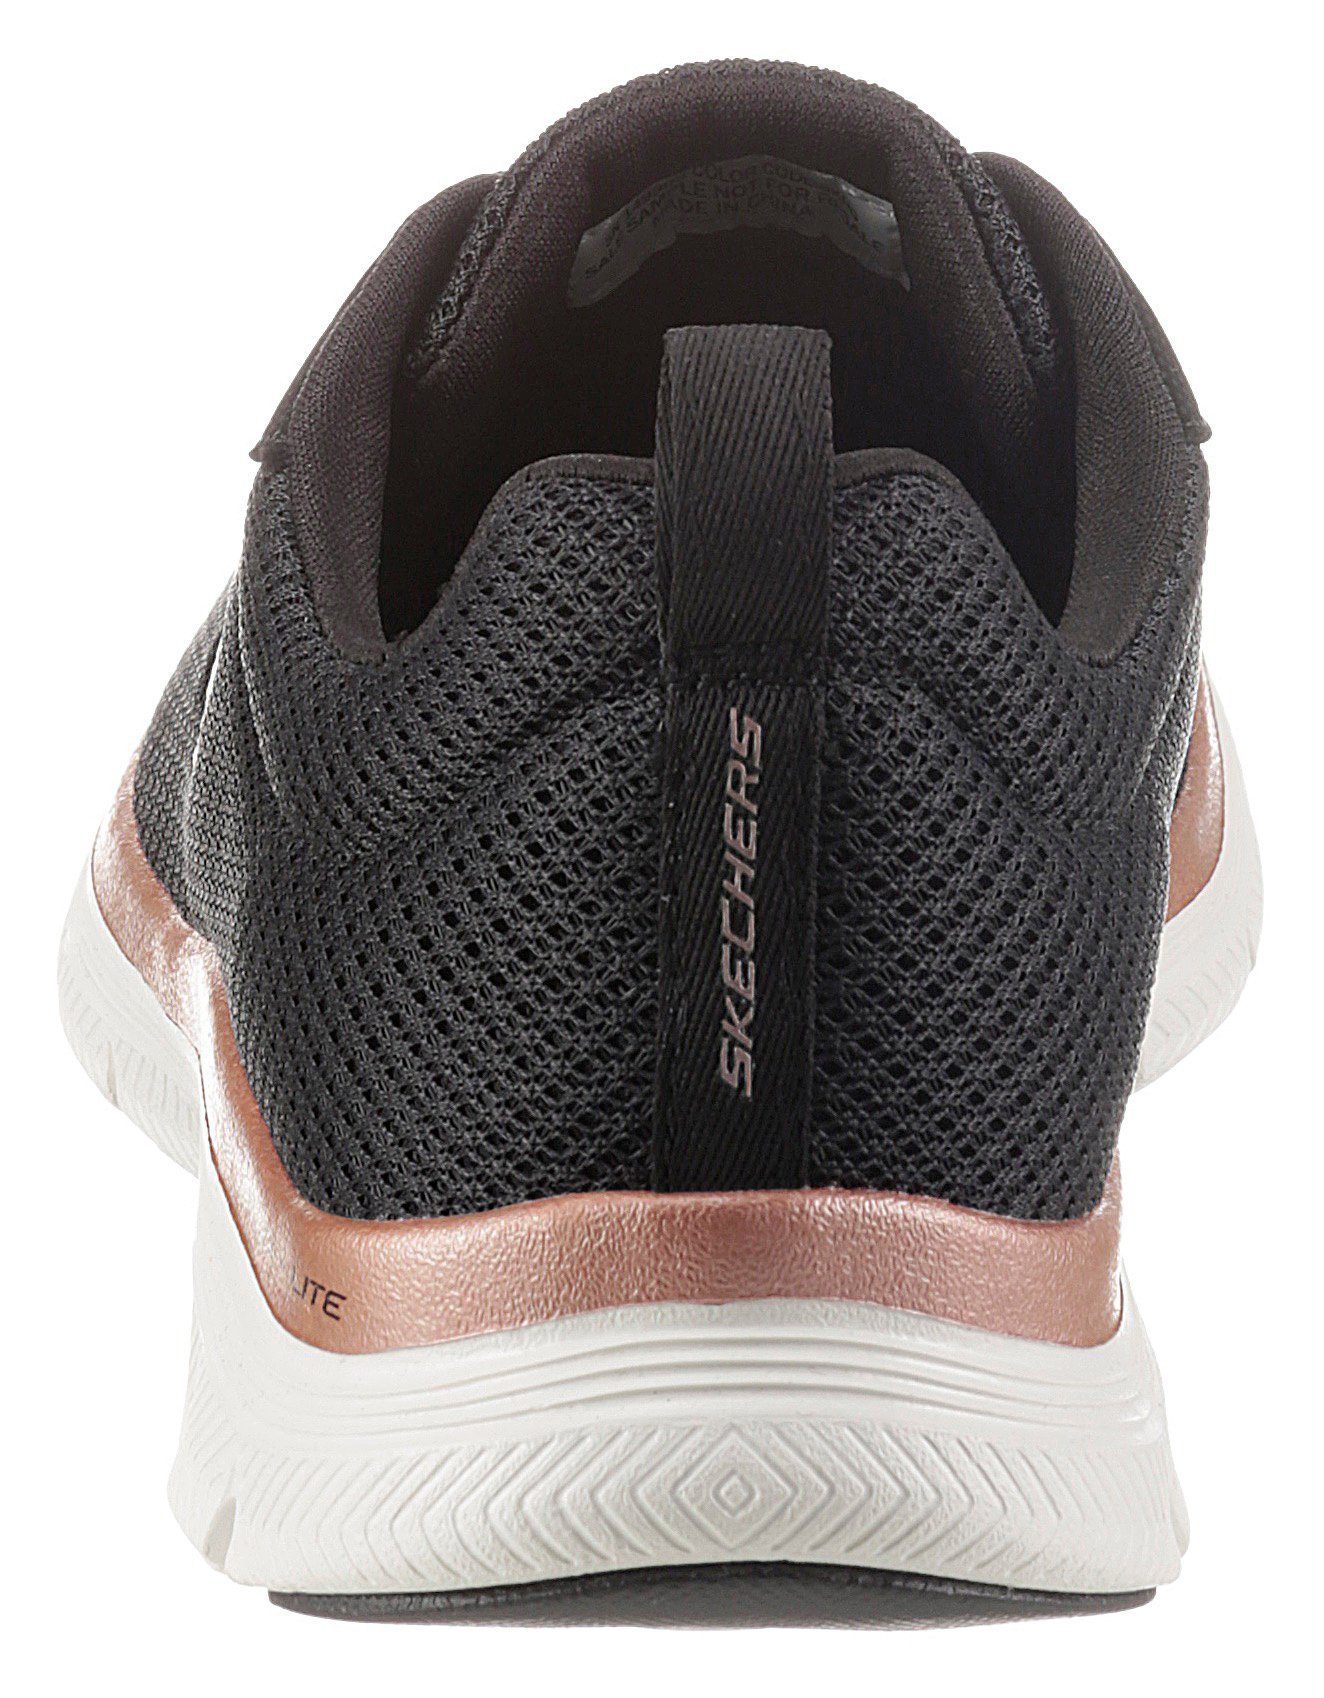 Memory FLEX VIEW Foam schwarz-rosé APPEAL Sneaker BRILLINAT 4.0 Skechers Ausstattung mit Air-Cooled